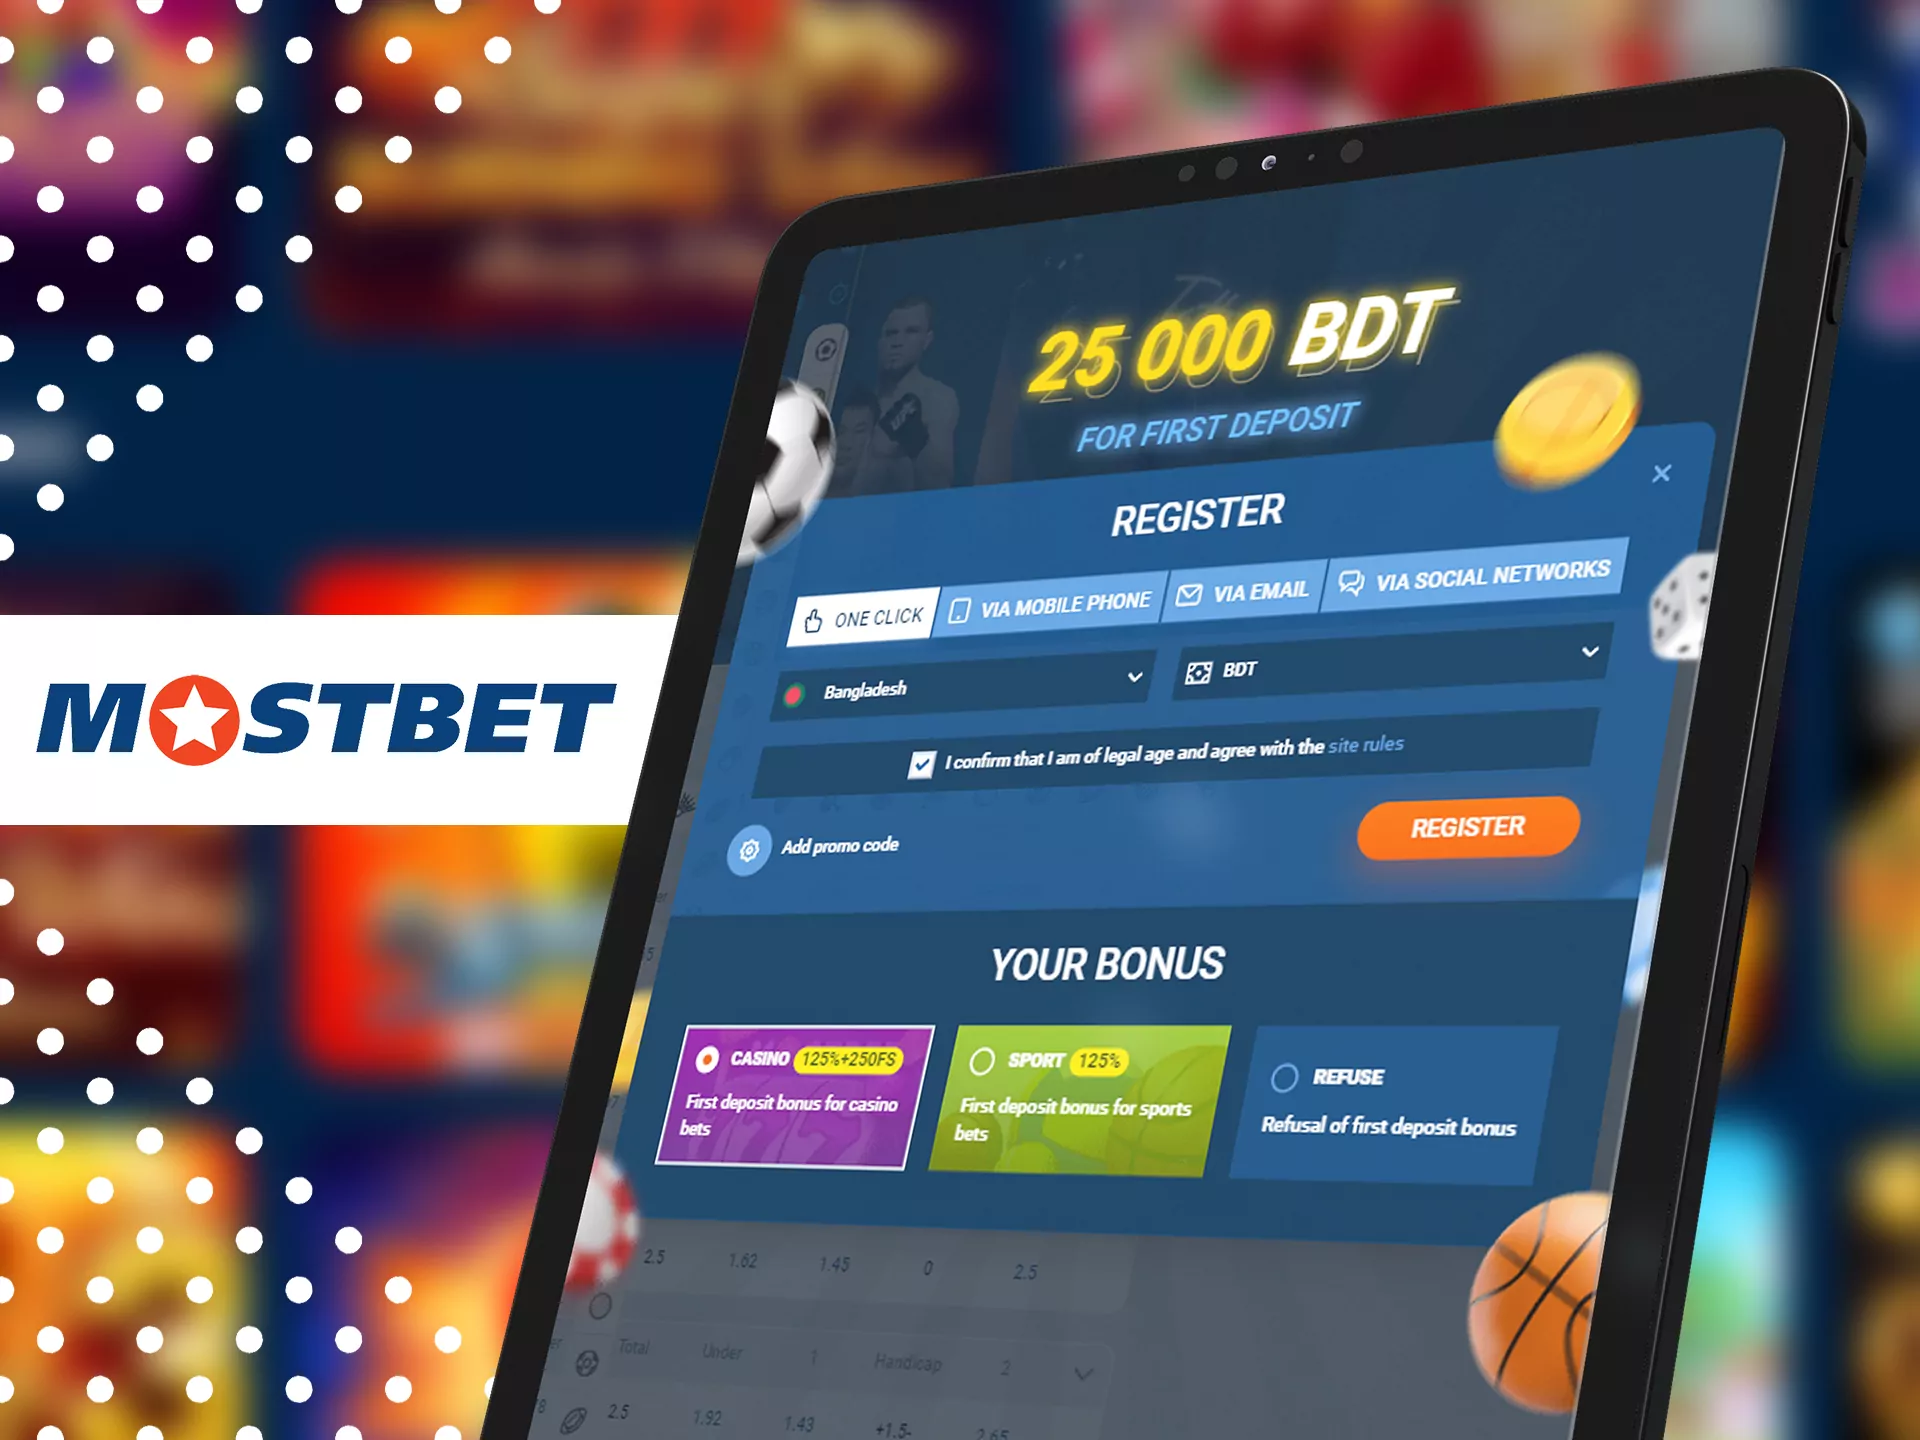 Register at Mostbet app and get bonuses.